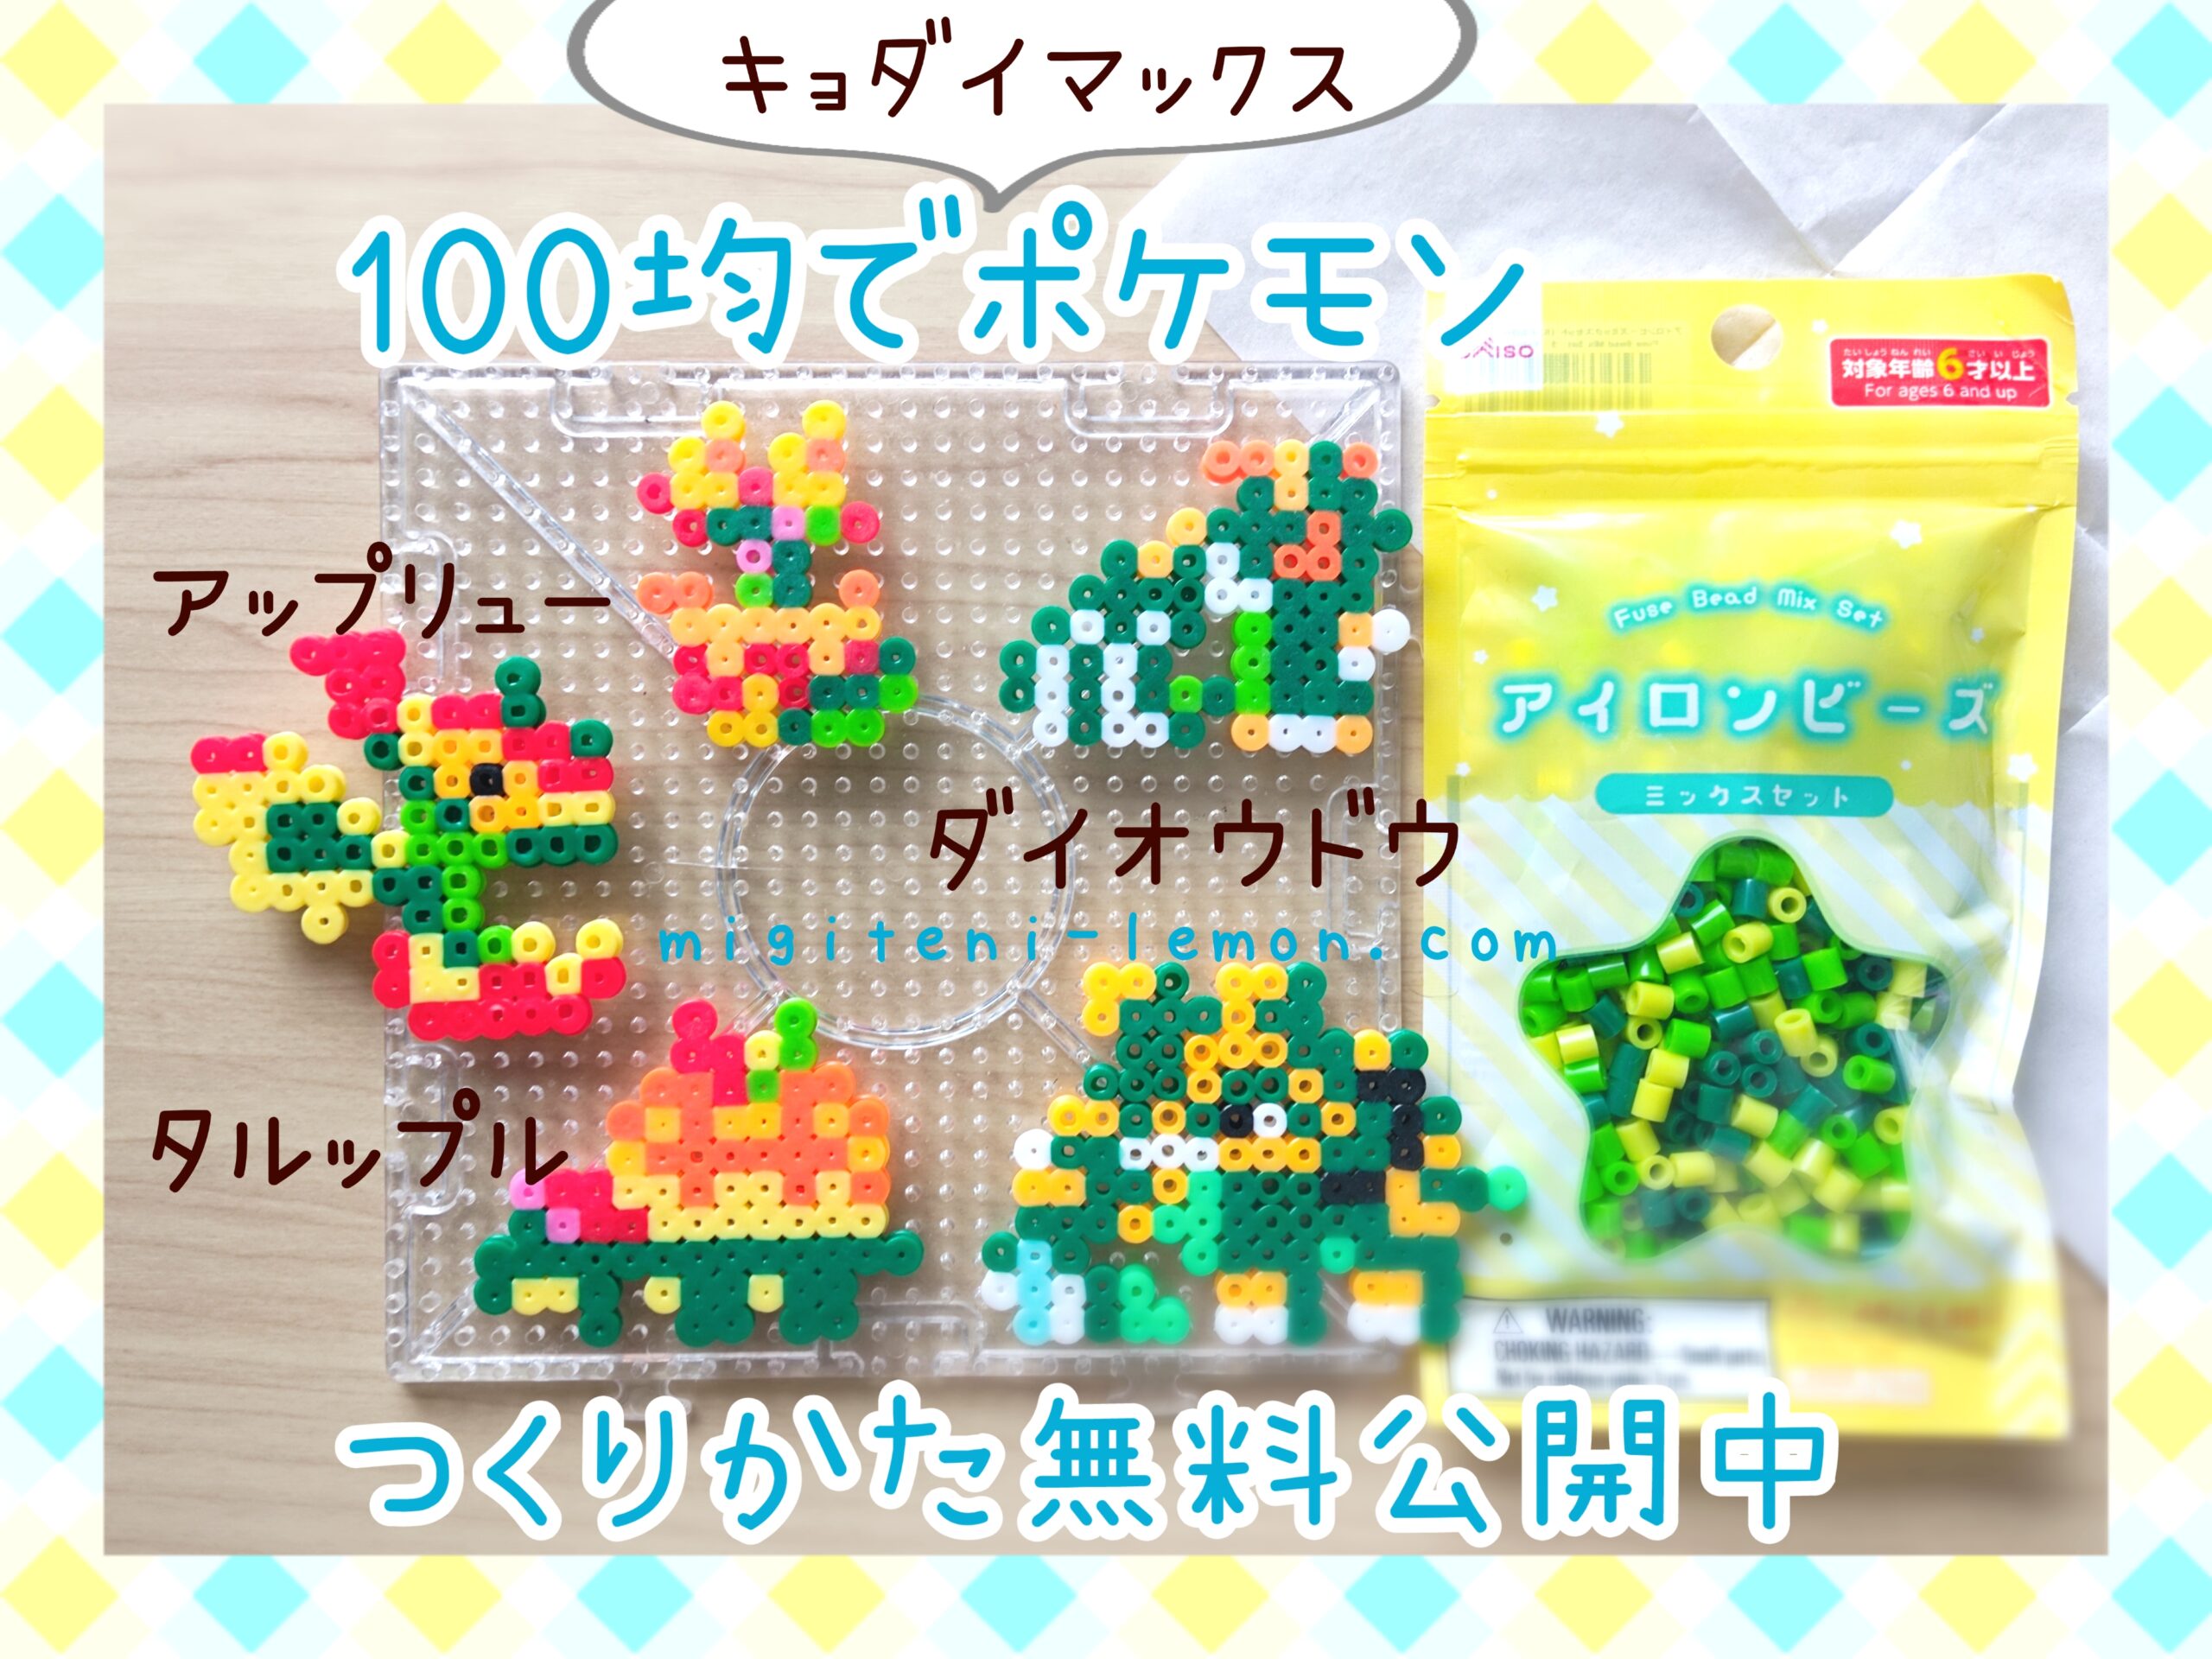 kyodai-daioudou-copperajah-tarupple-appletun-appryu-flapple-pokemon-beads-zuan